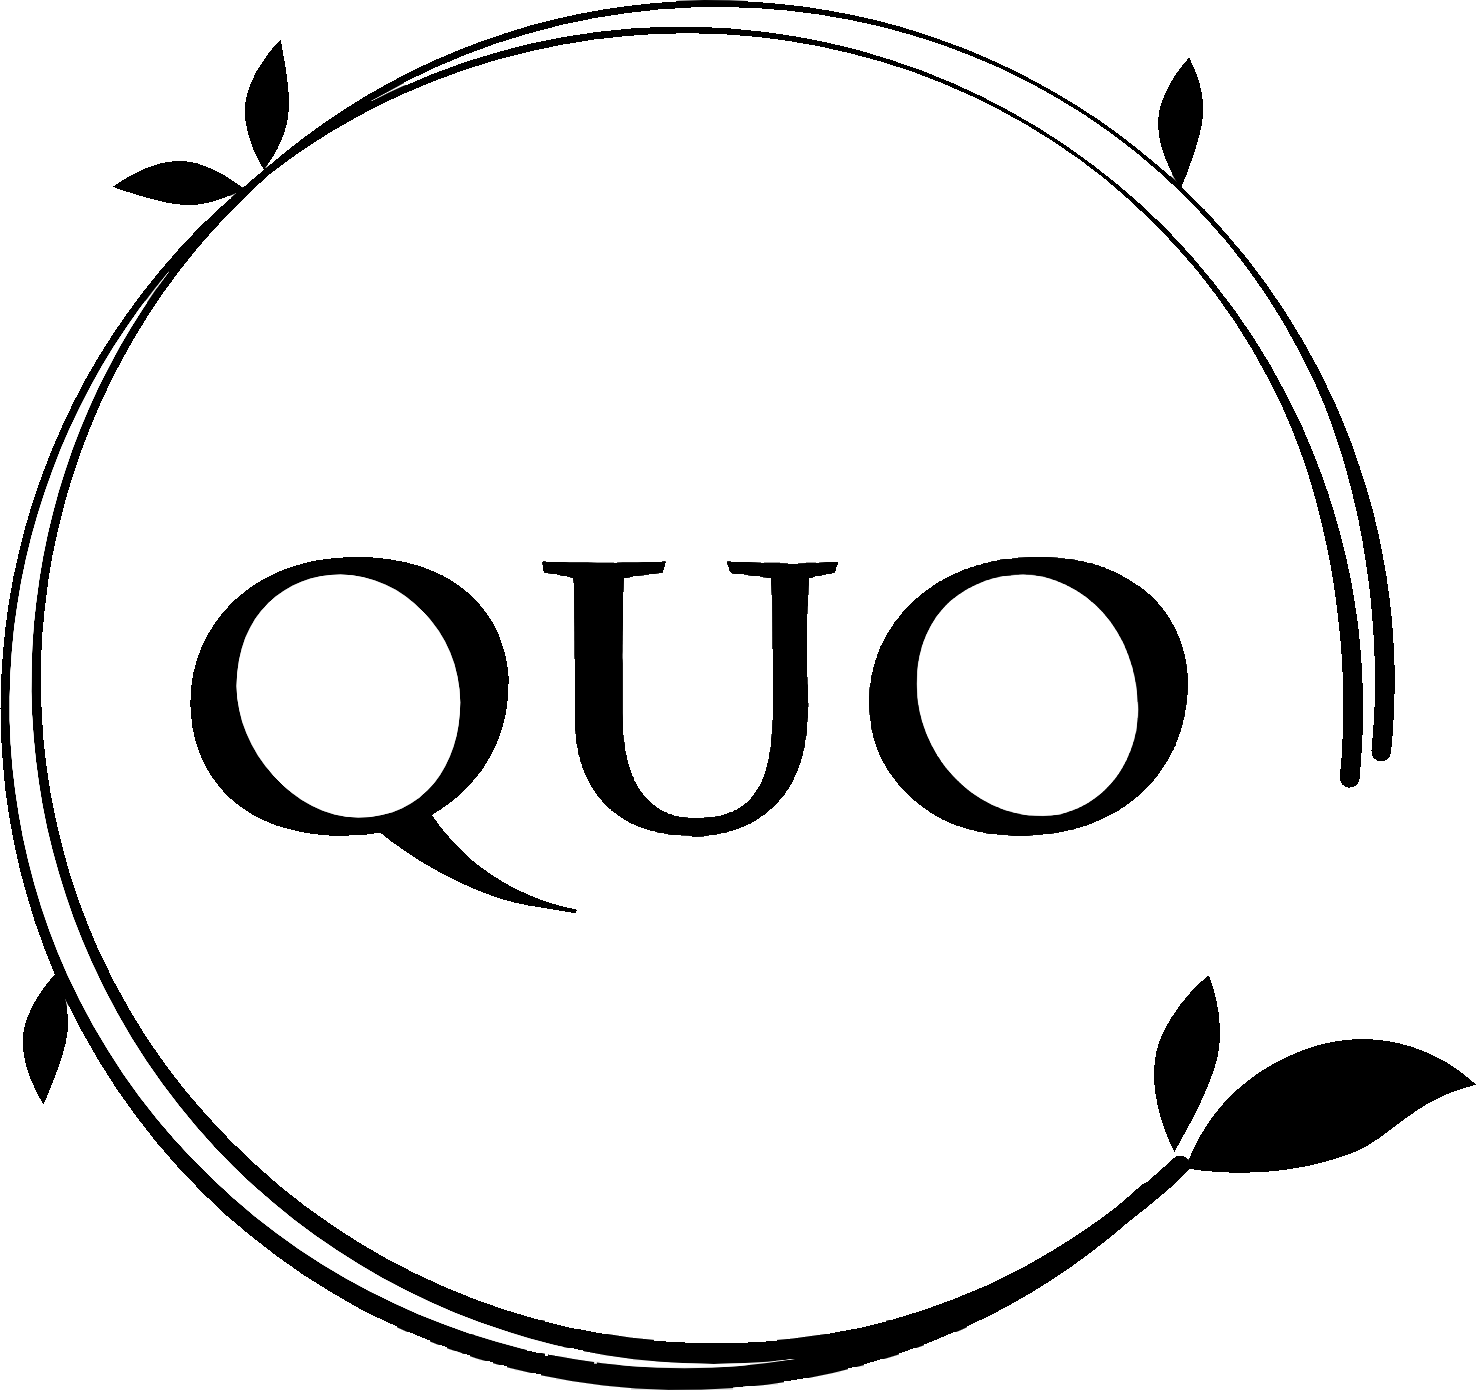 quo-logo | クゥオ